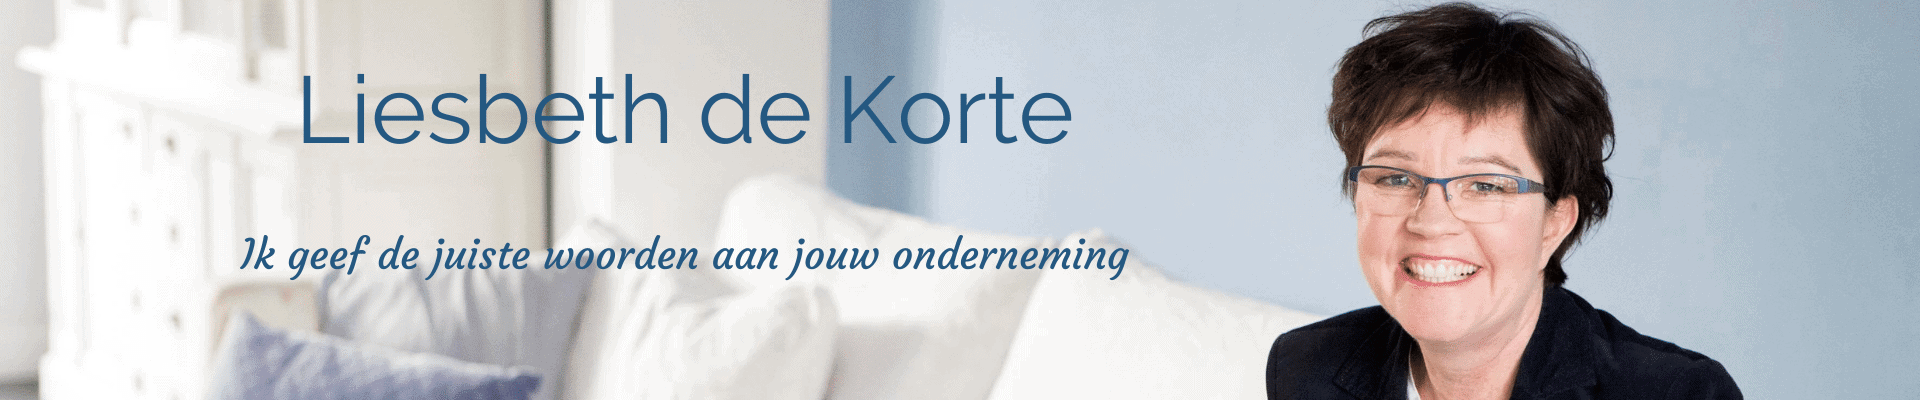 Liesbeth de Korte